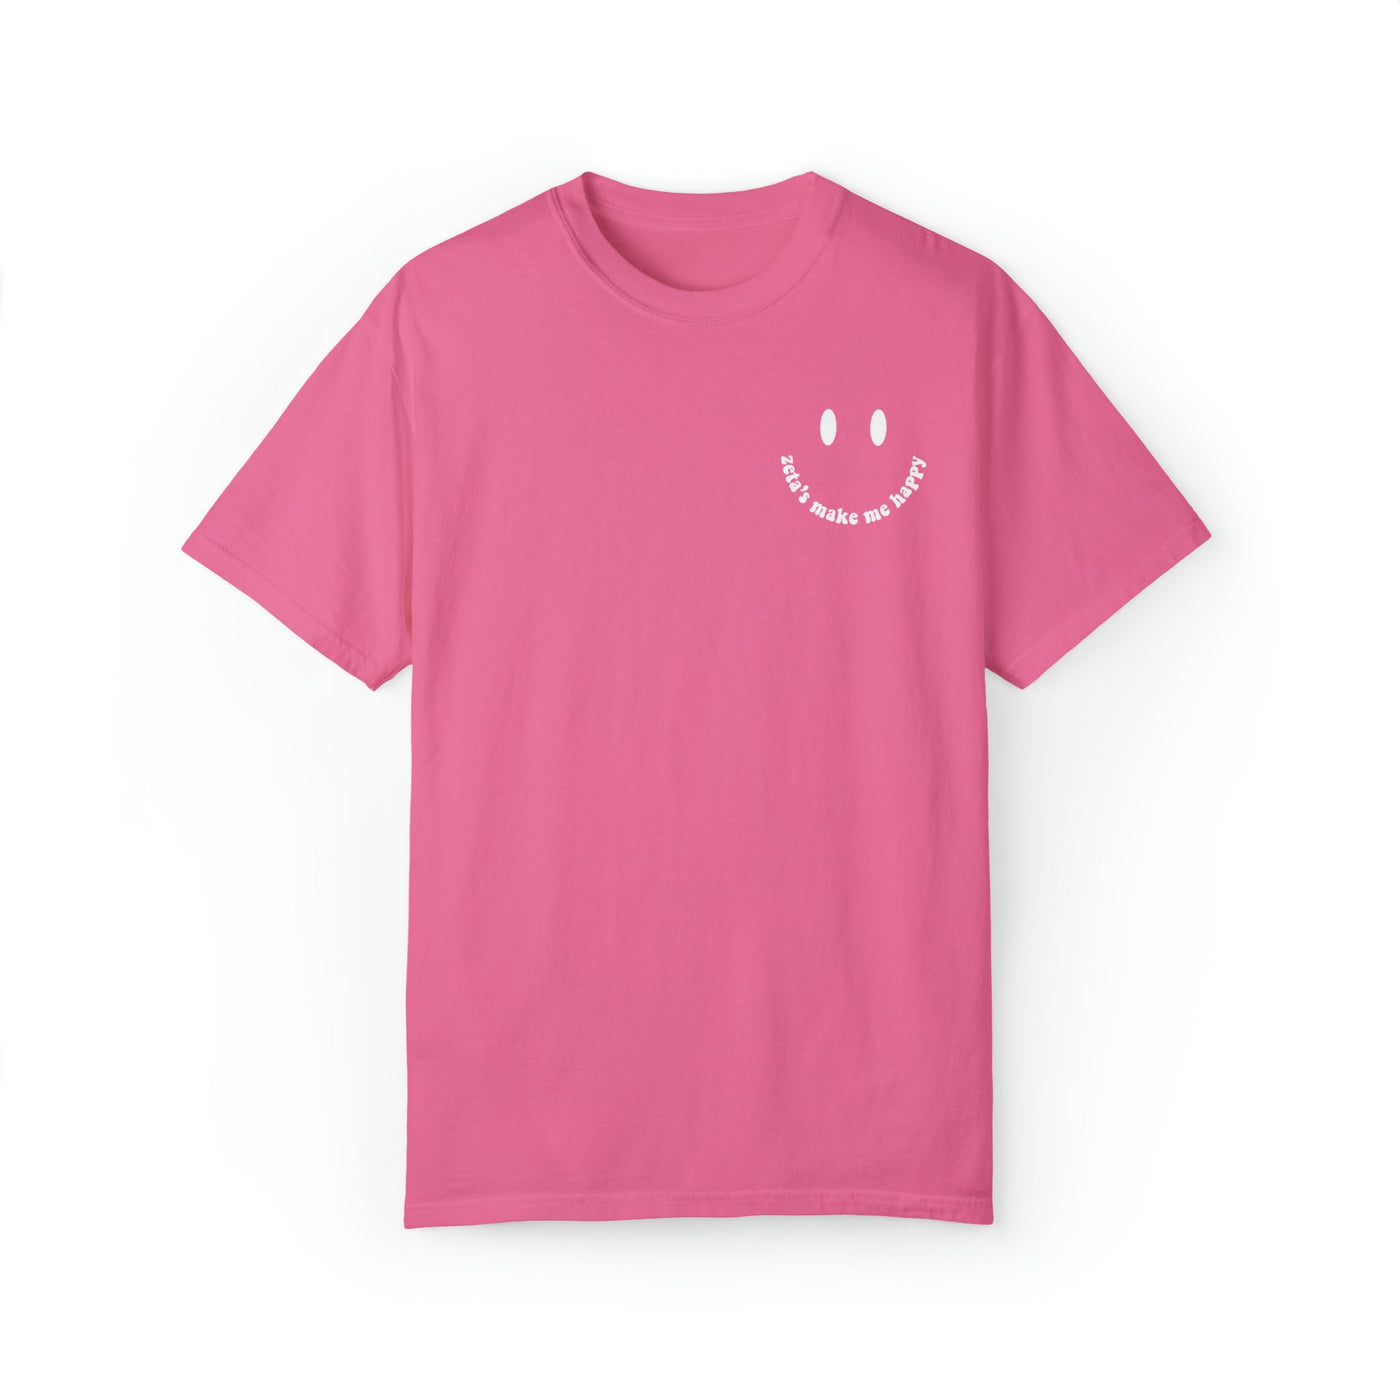 Zeta Tau Alpha's Make Me Happy Sorority Comfy T-shirt